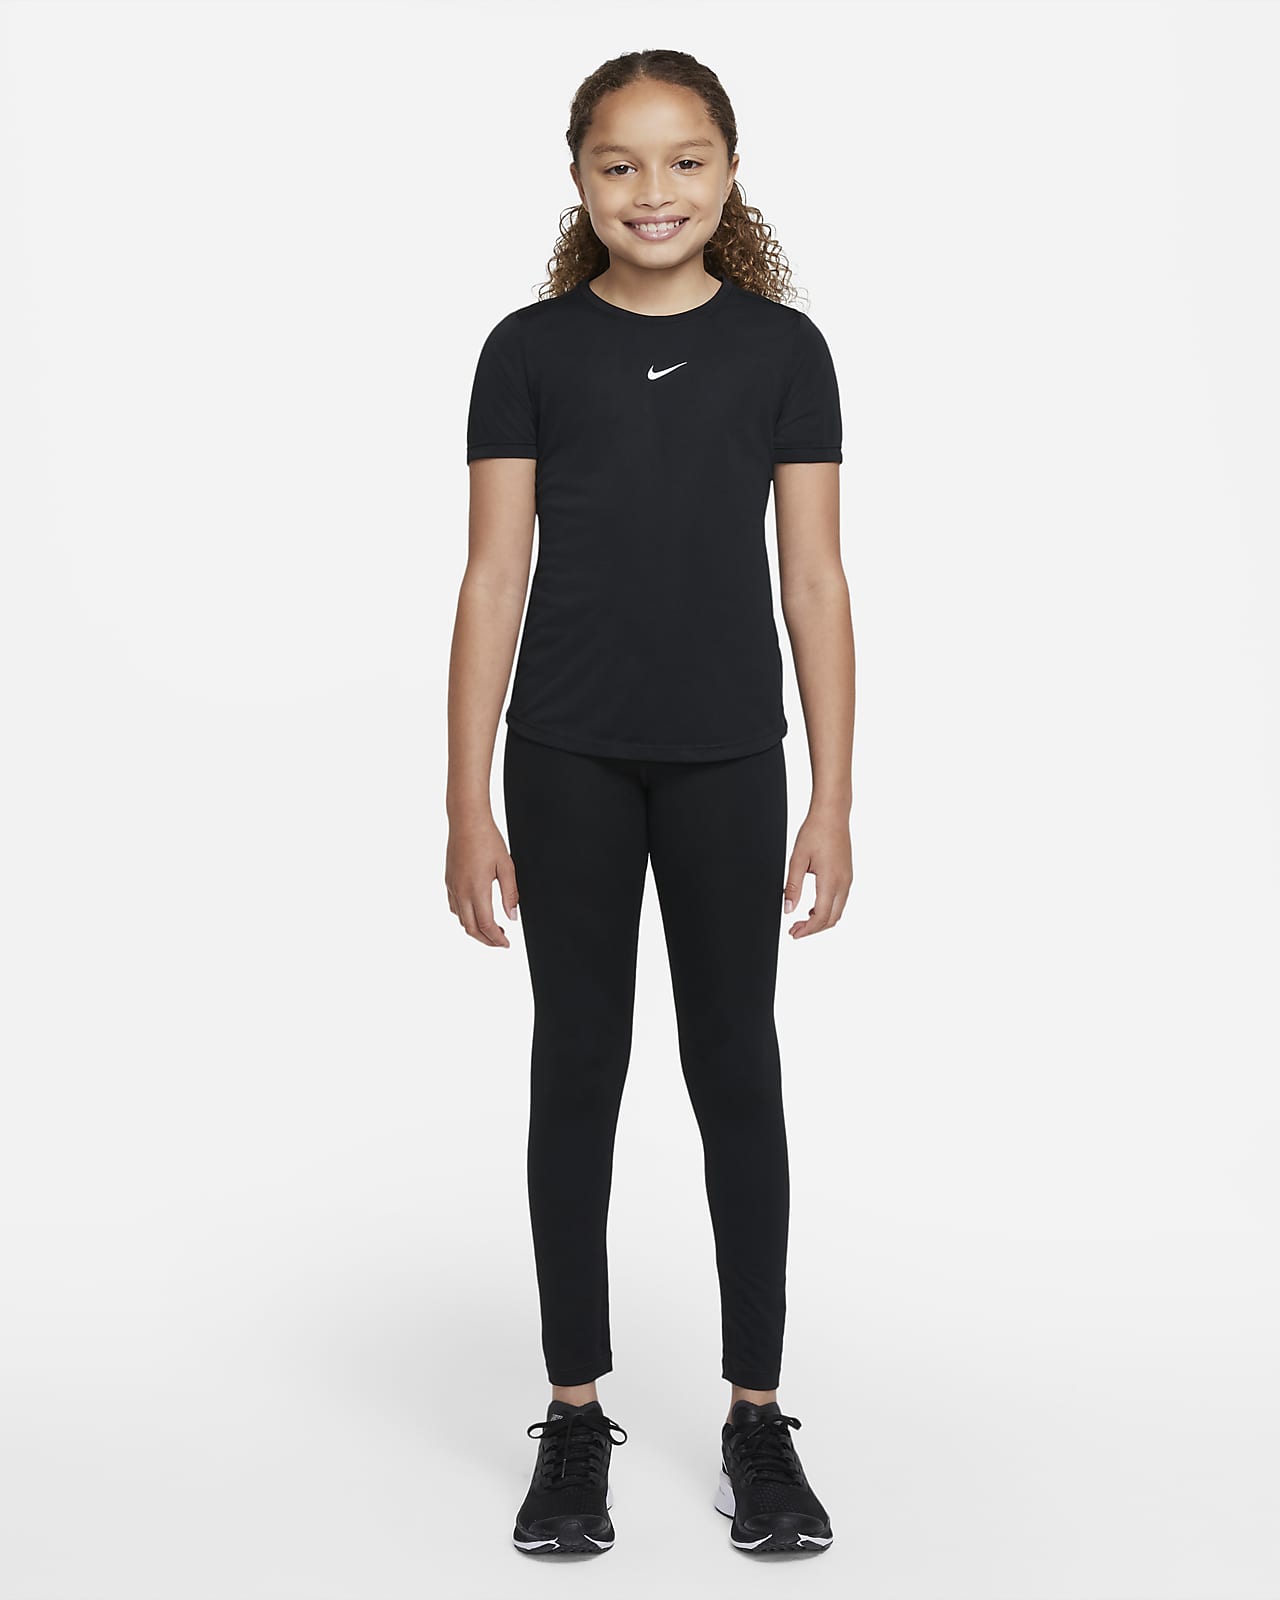 Big (Girls\') Top. One Kids\' Nike Short-Sleeve